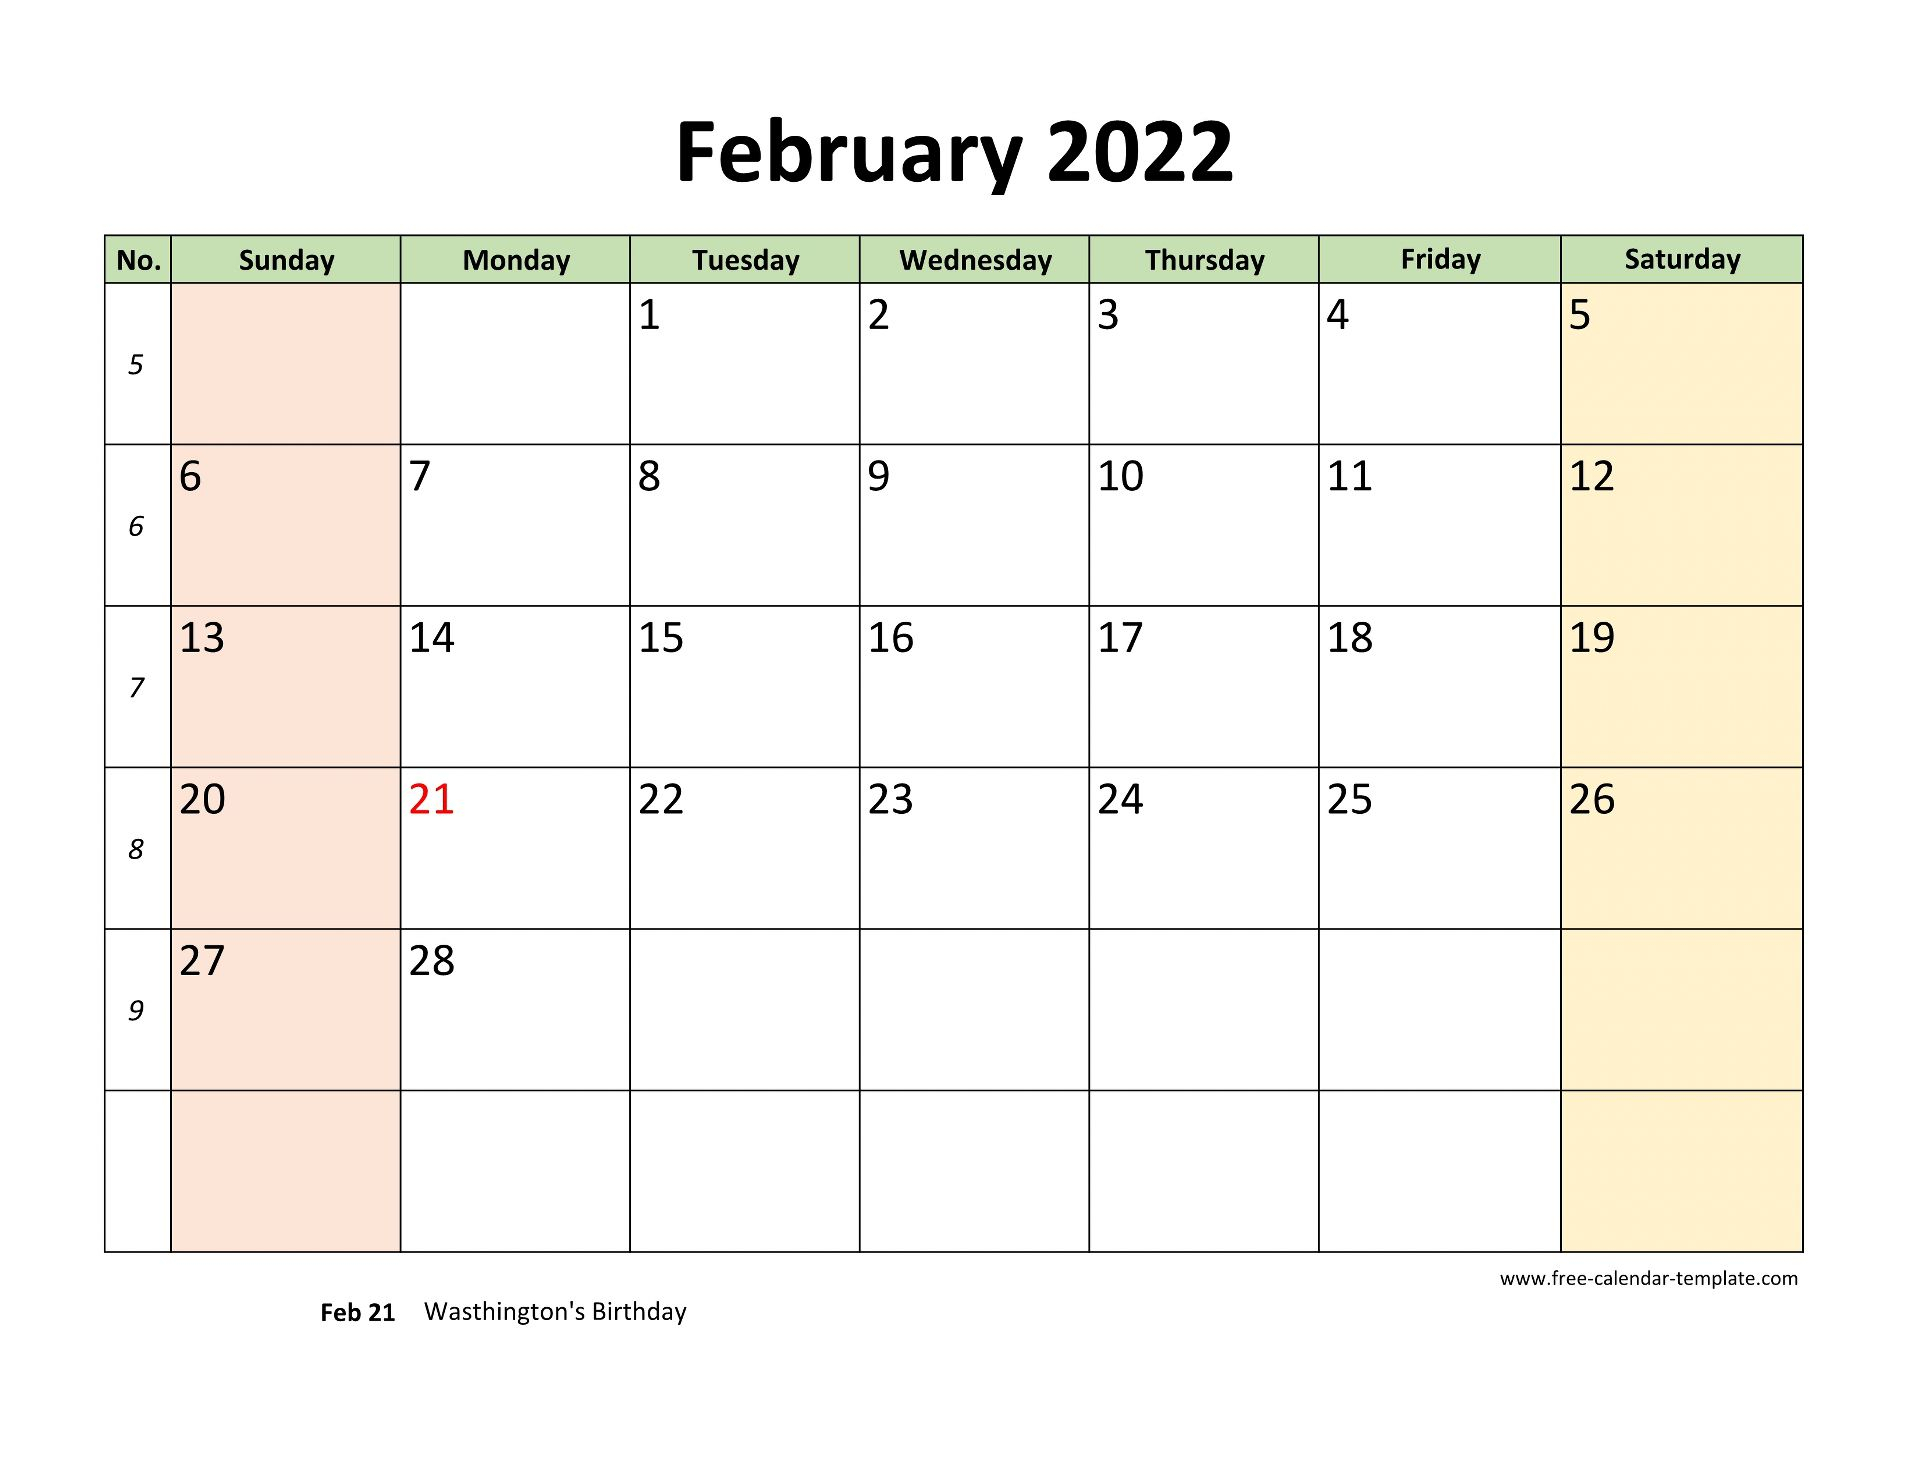 february 2022 free calendar tempplate free calendar 2